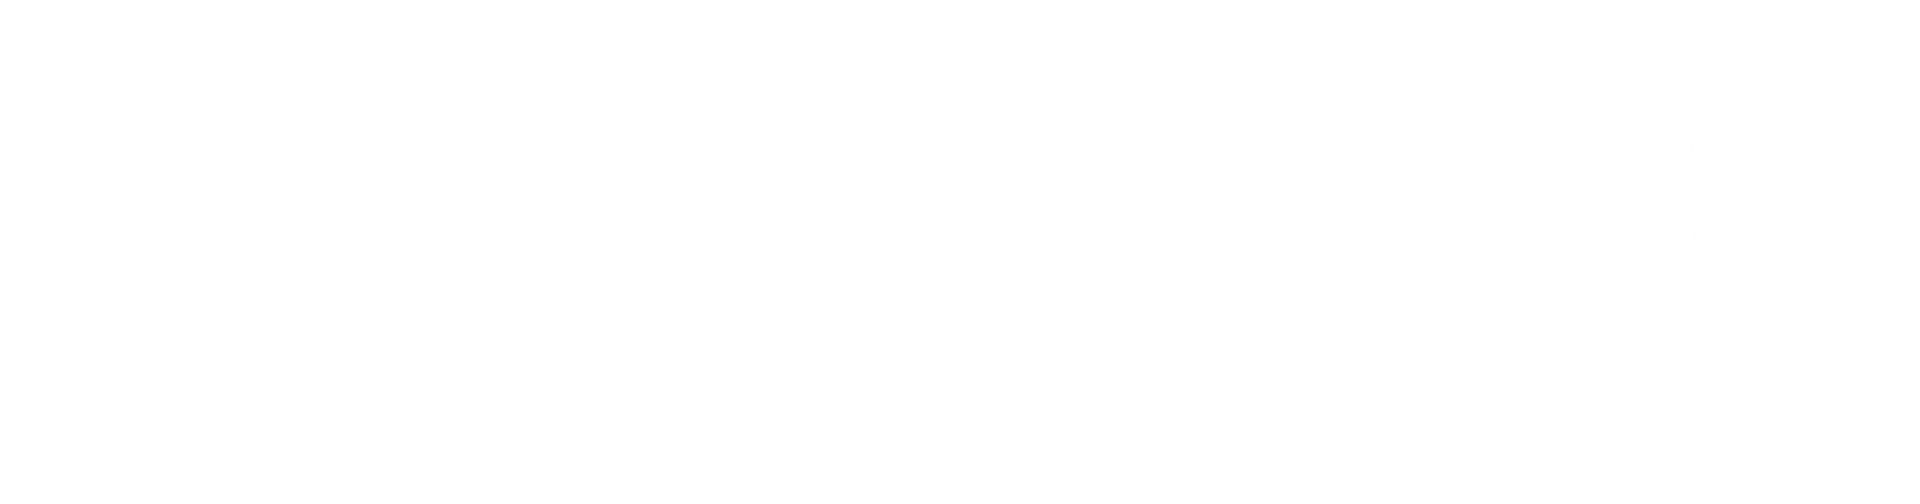 The Sandpiper Residences Header Logo - Select to go home